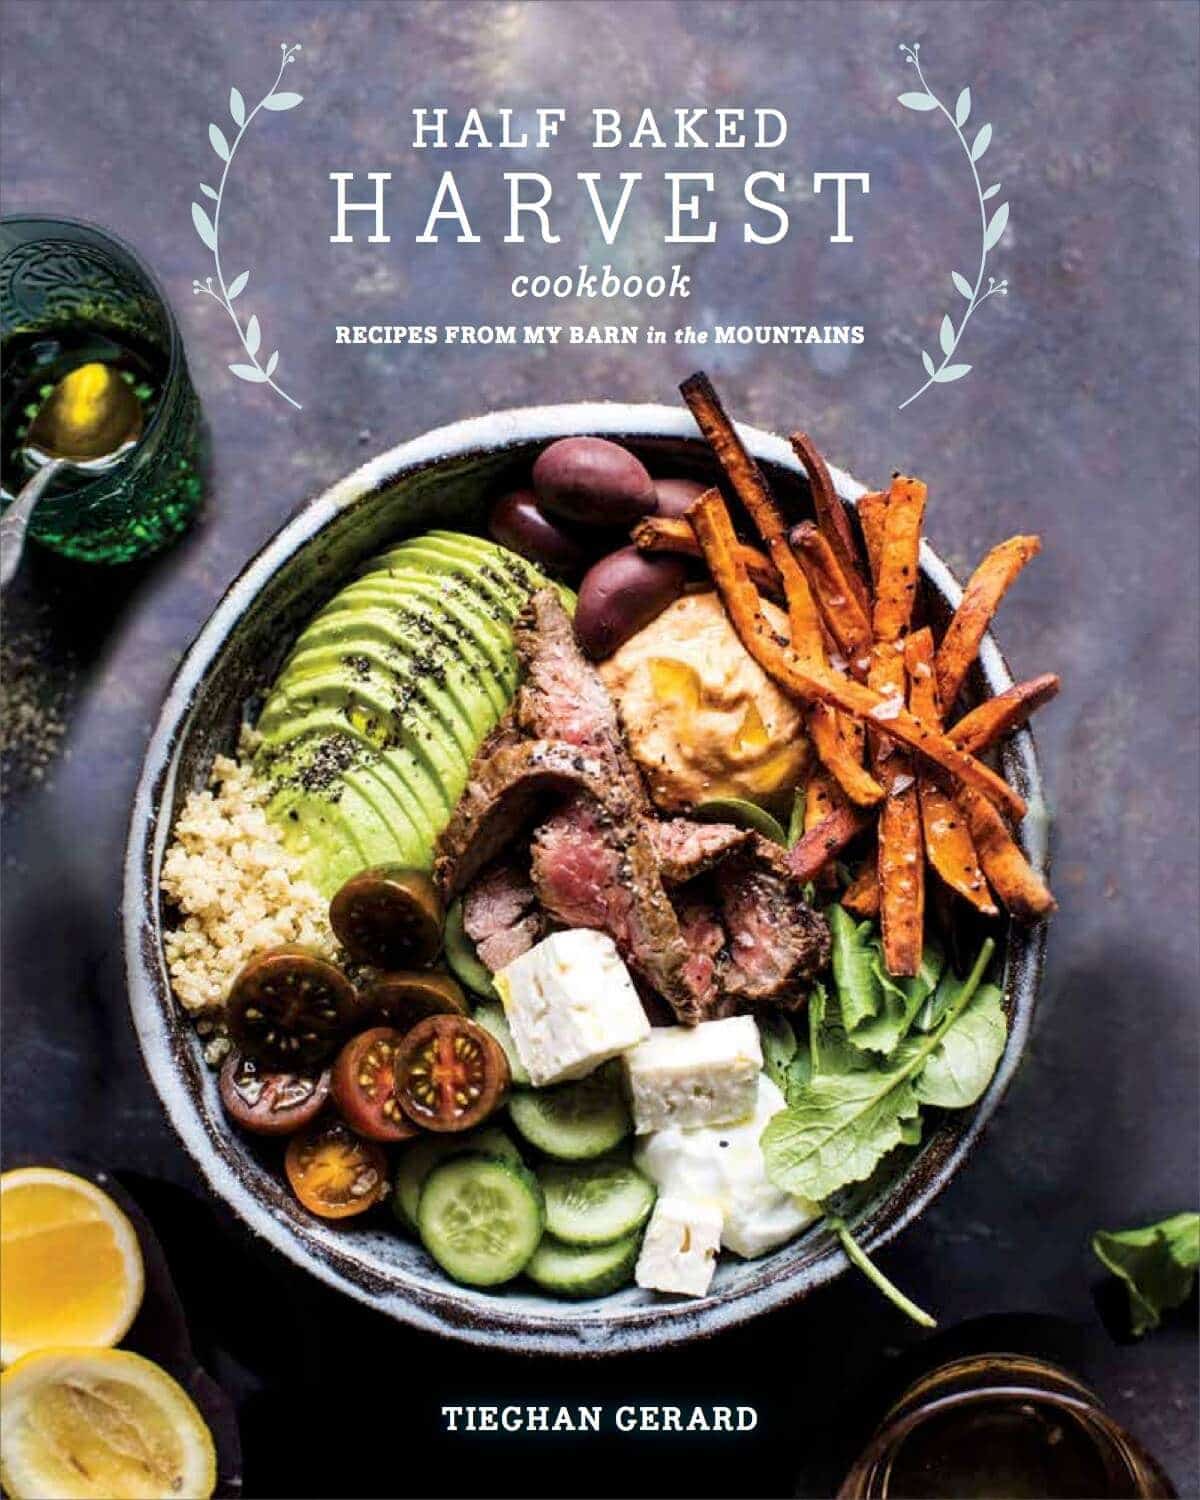 bob外围官网appHalf Baked Harvest Cookbook Cover | halfbakedharvest.com @hbharvest